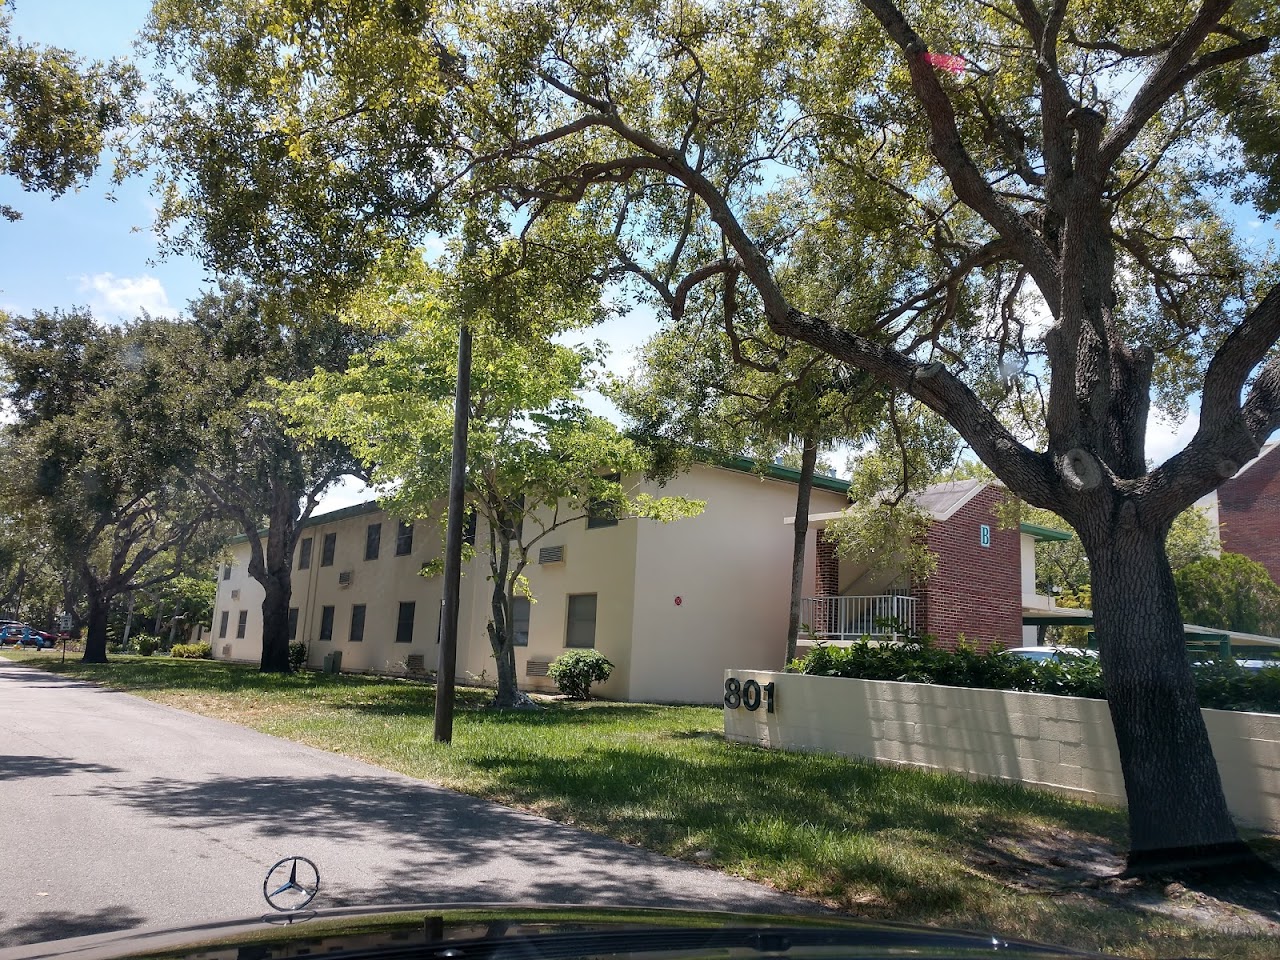 Photo of ST. ELIZABETH GARDENS. Affordable housing located at 801 NE 33RD STREET POMPANO BEACH, FL 33064